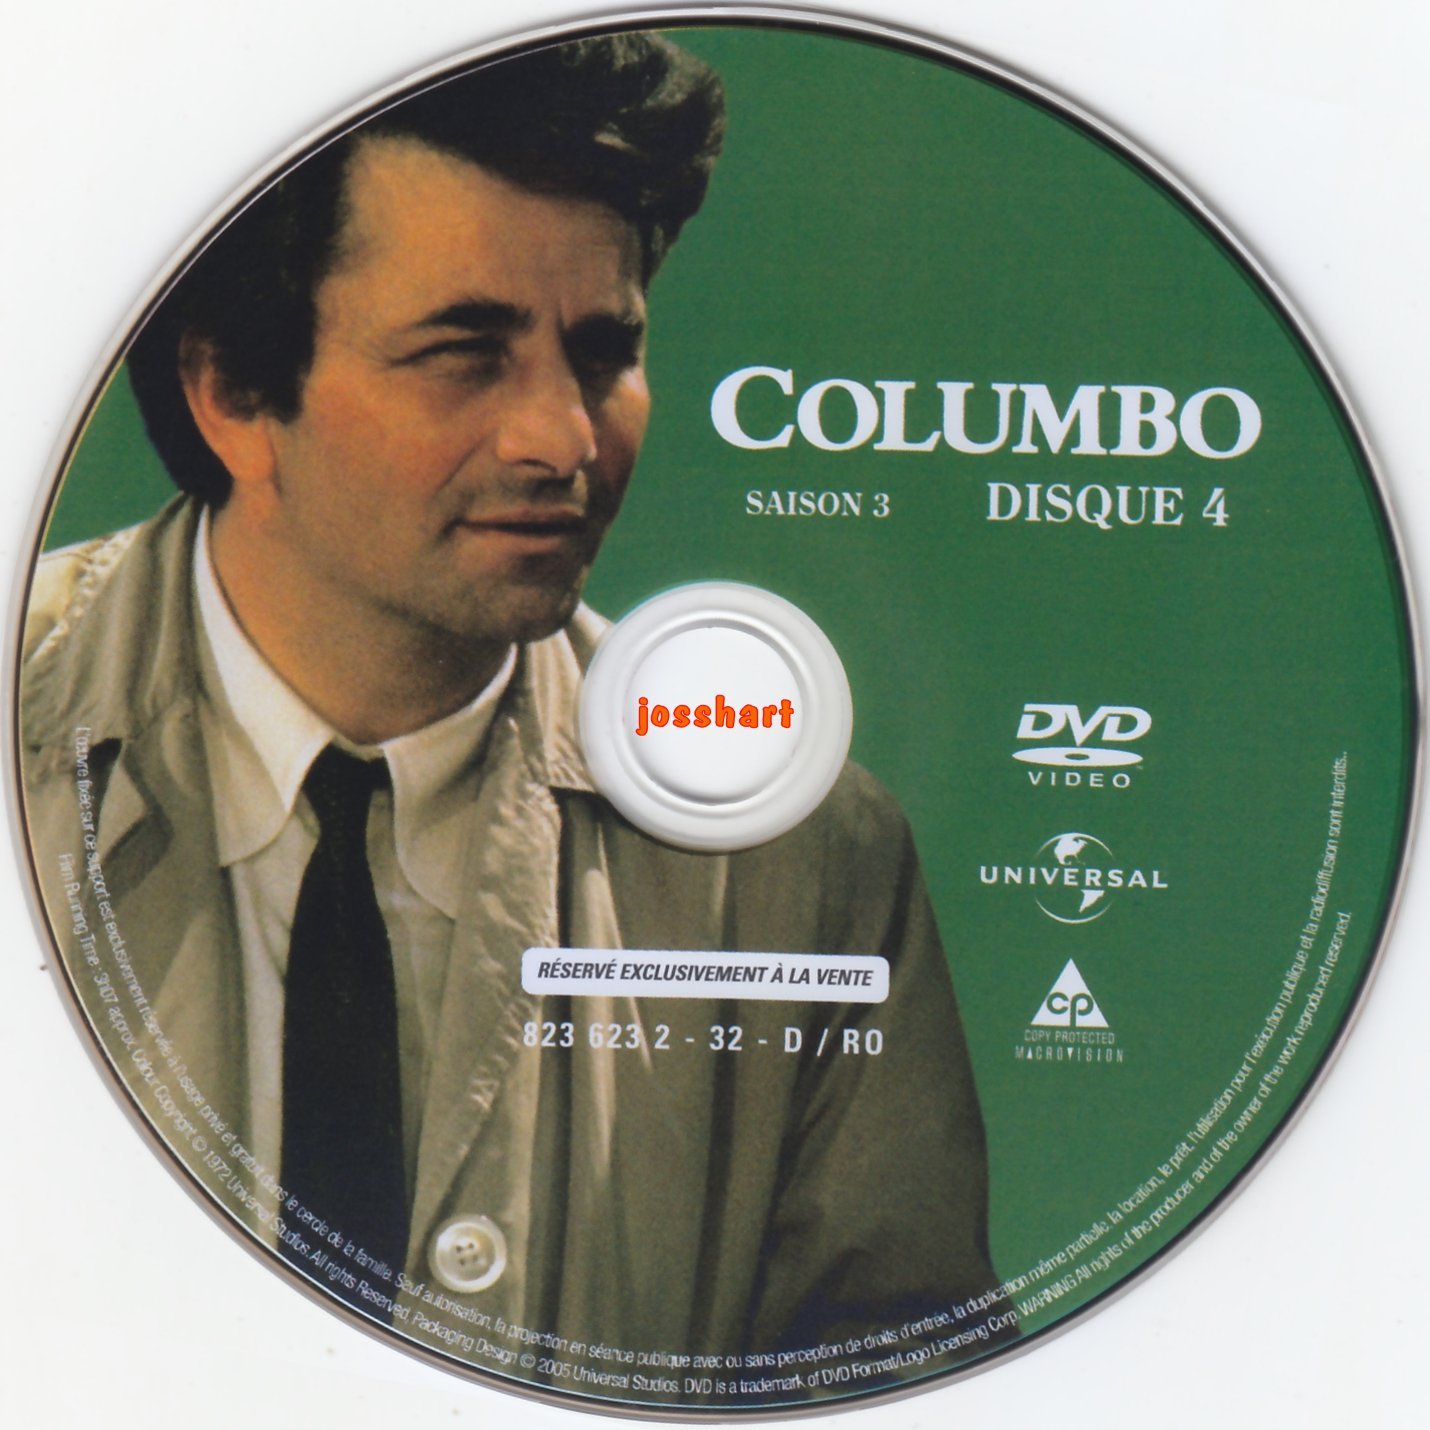 Columbo S3 DISC4